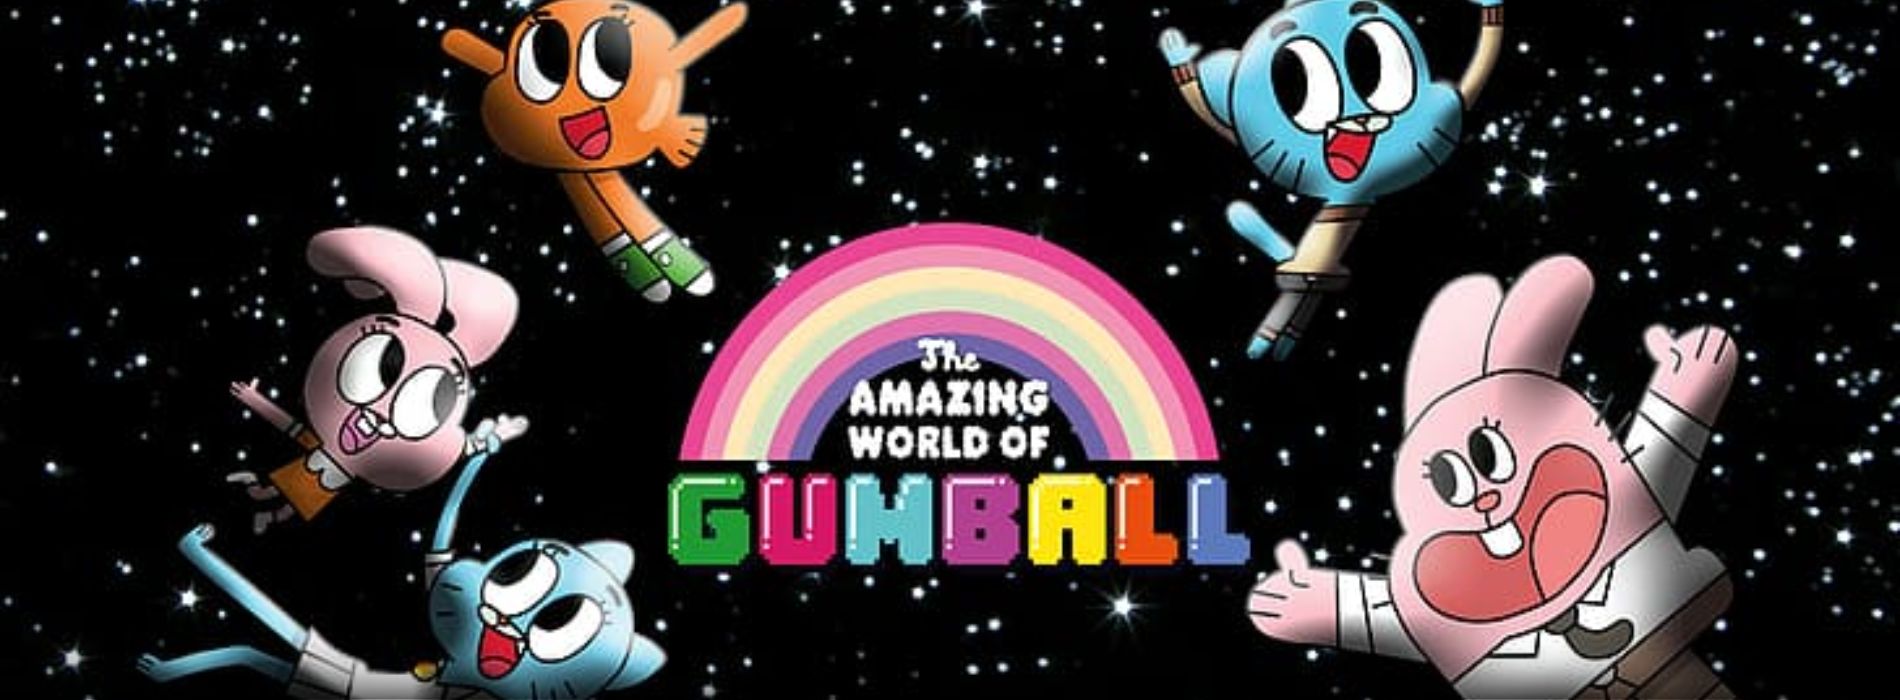 célèbres-dessins animés-chats-Gumball (Le Monde Incroyable de Gumball)